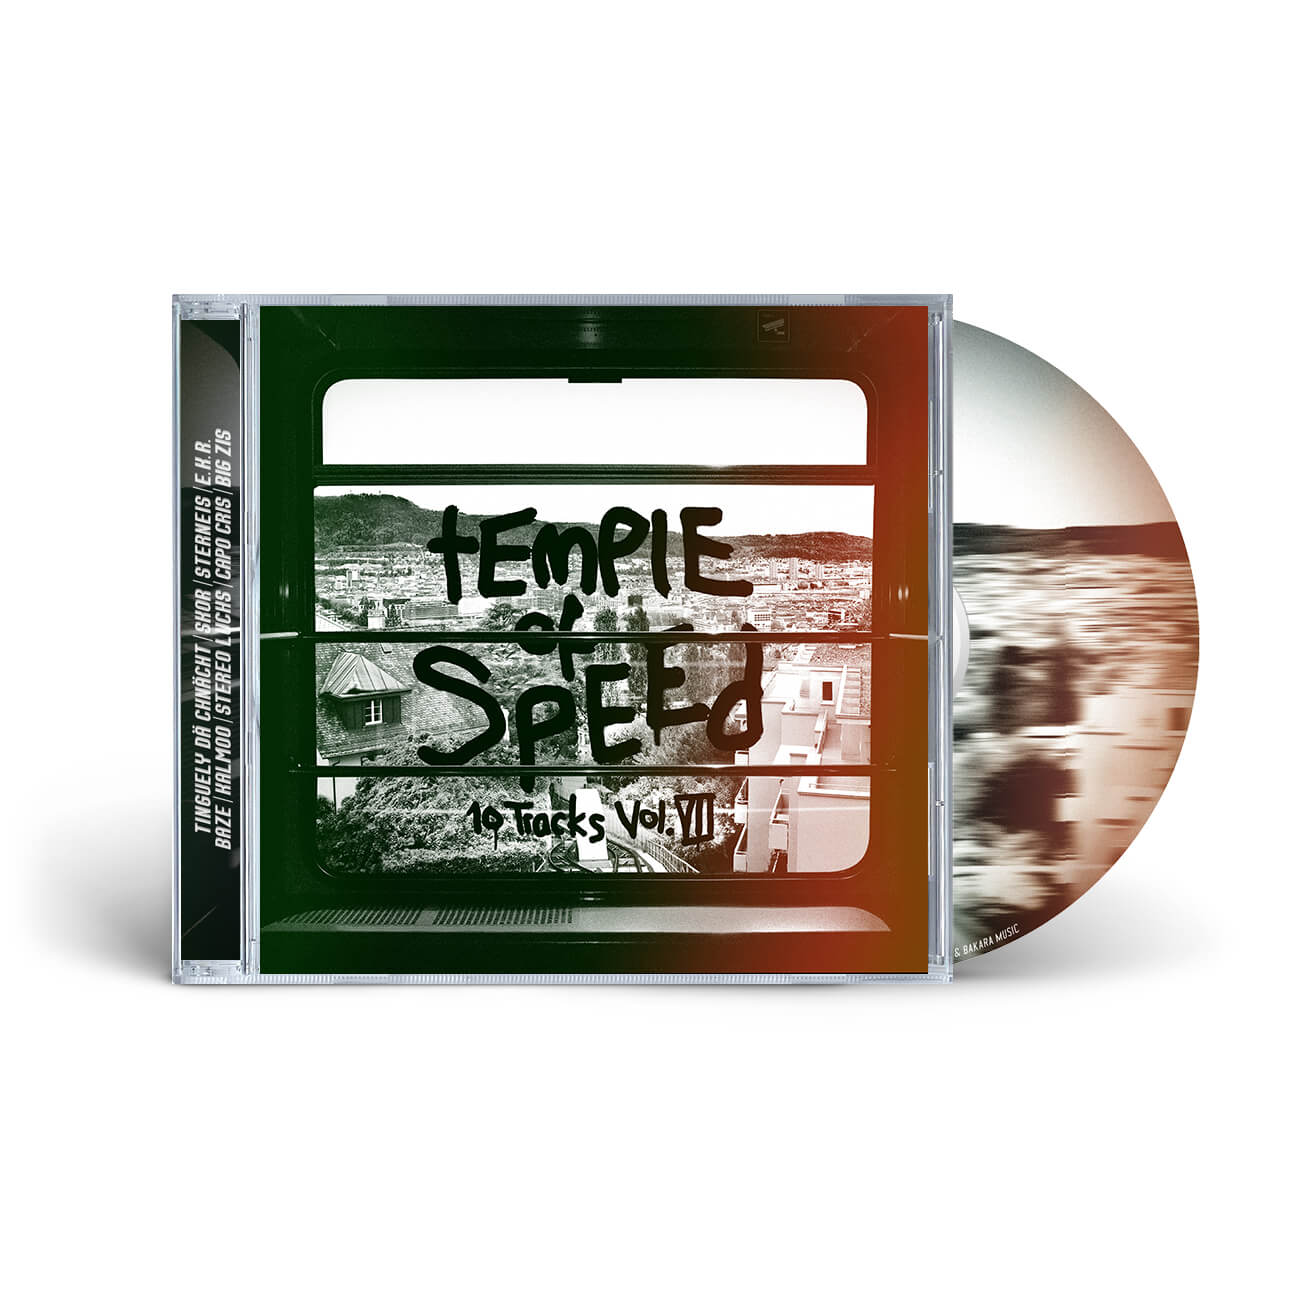 Temple of Speed | CD | 10 Tracks - Vol. 7